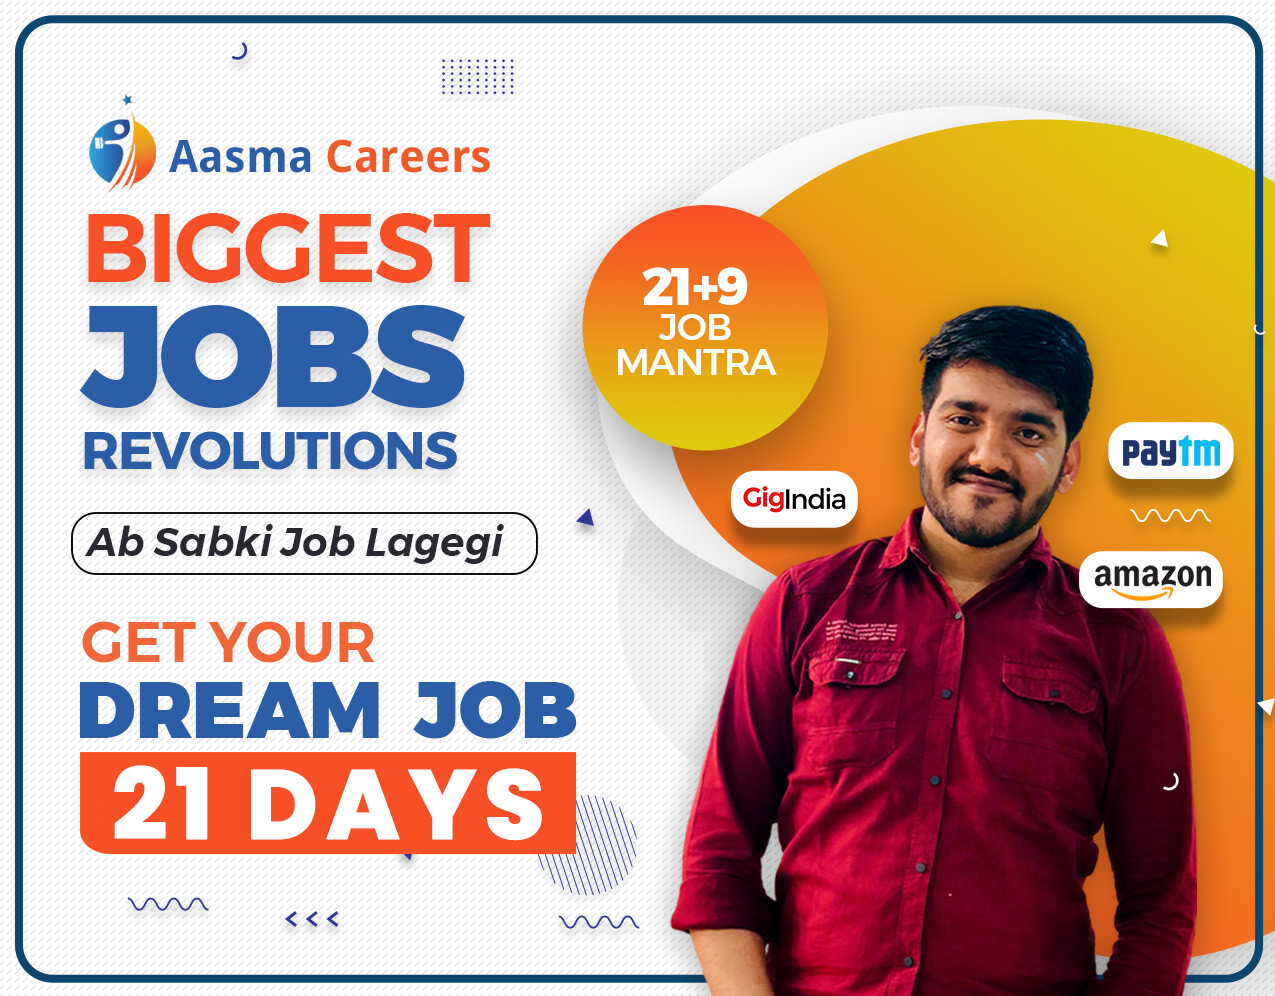 Get Your Dream Job in 21 Days - Batch 17